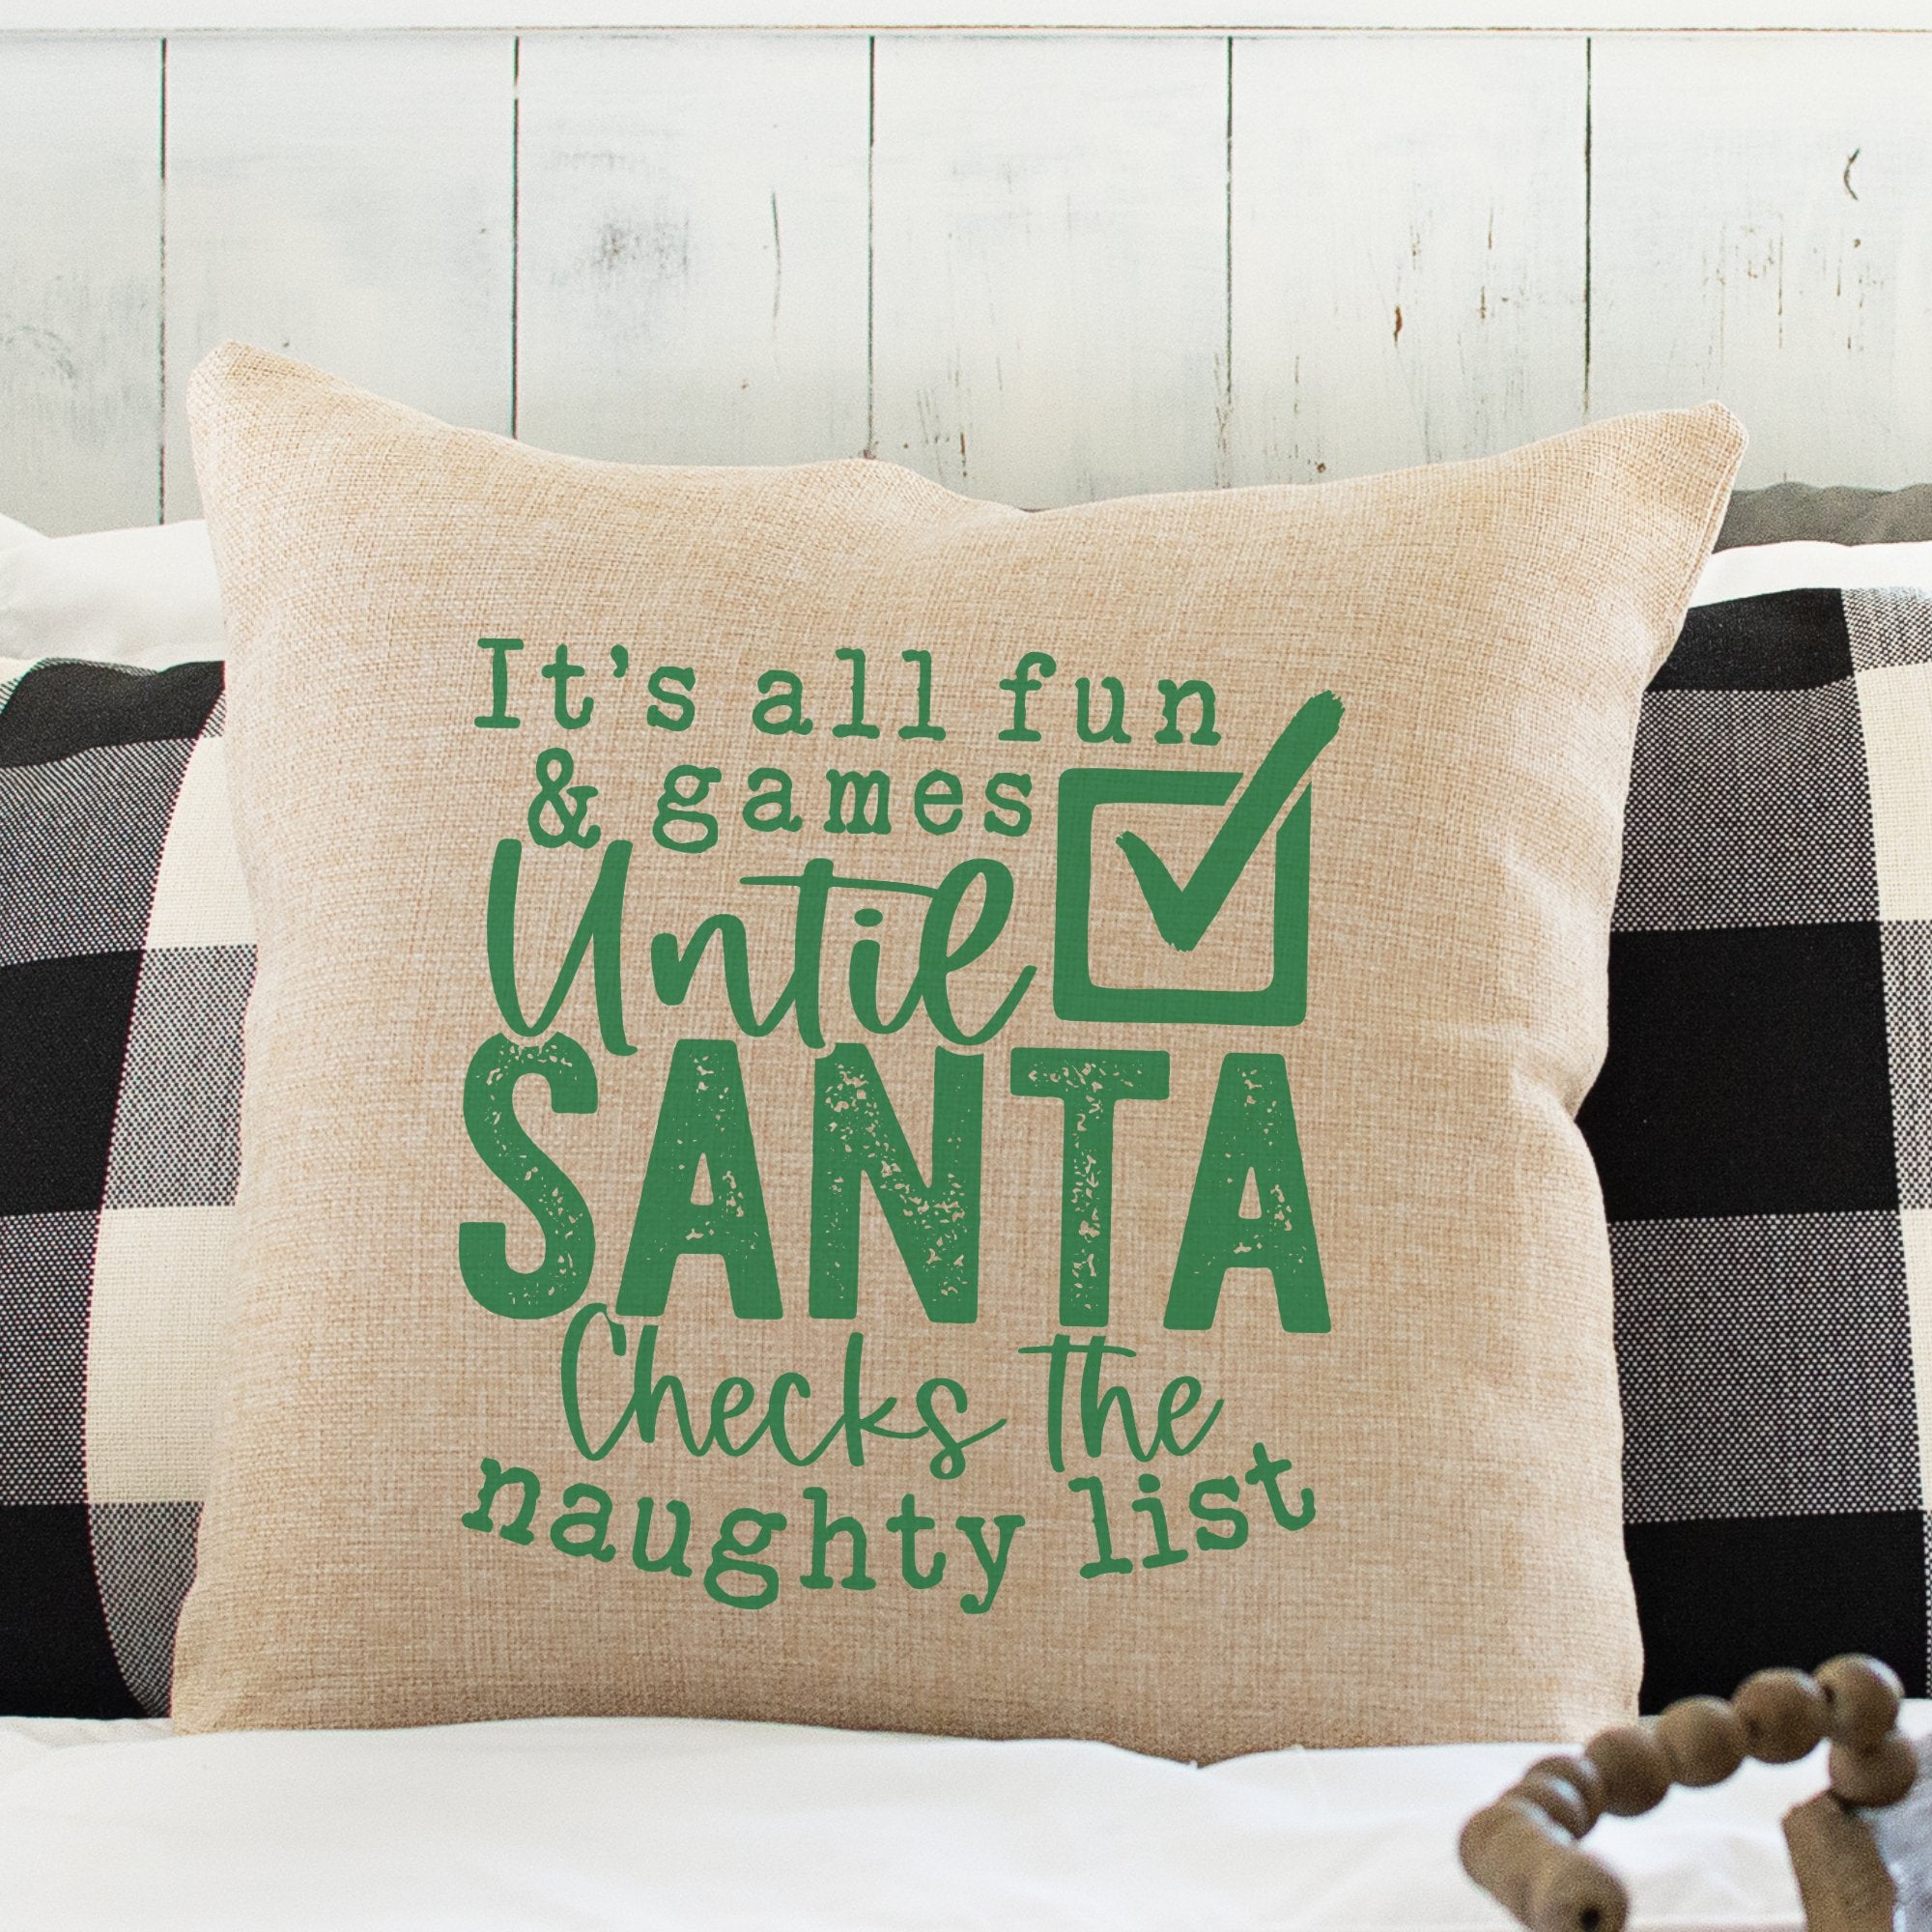 Santa Checks Naughty List Green Christmas Pillow Cover - Trendznmore